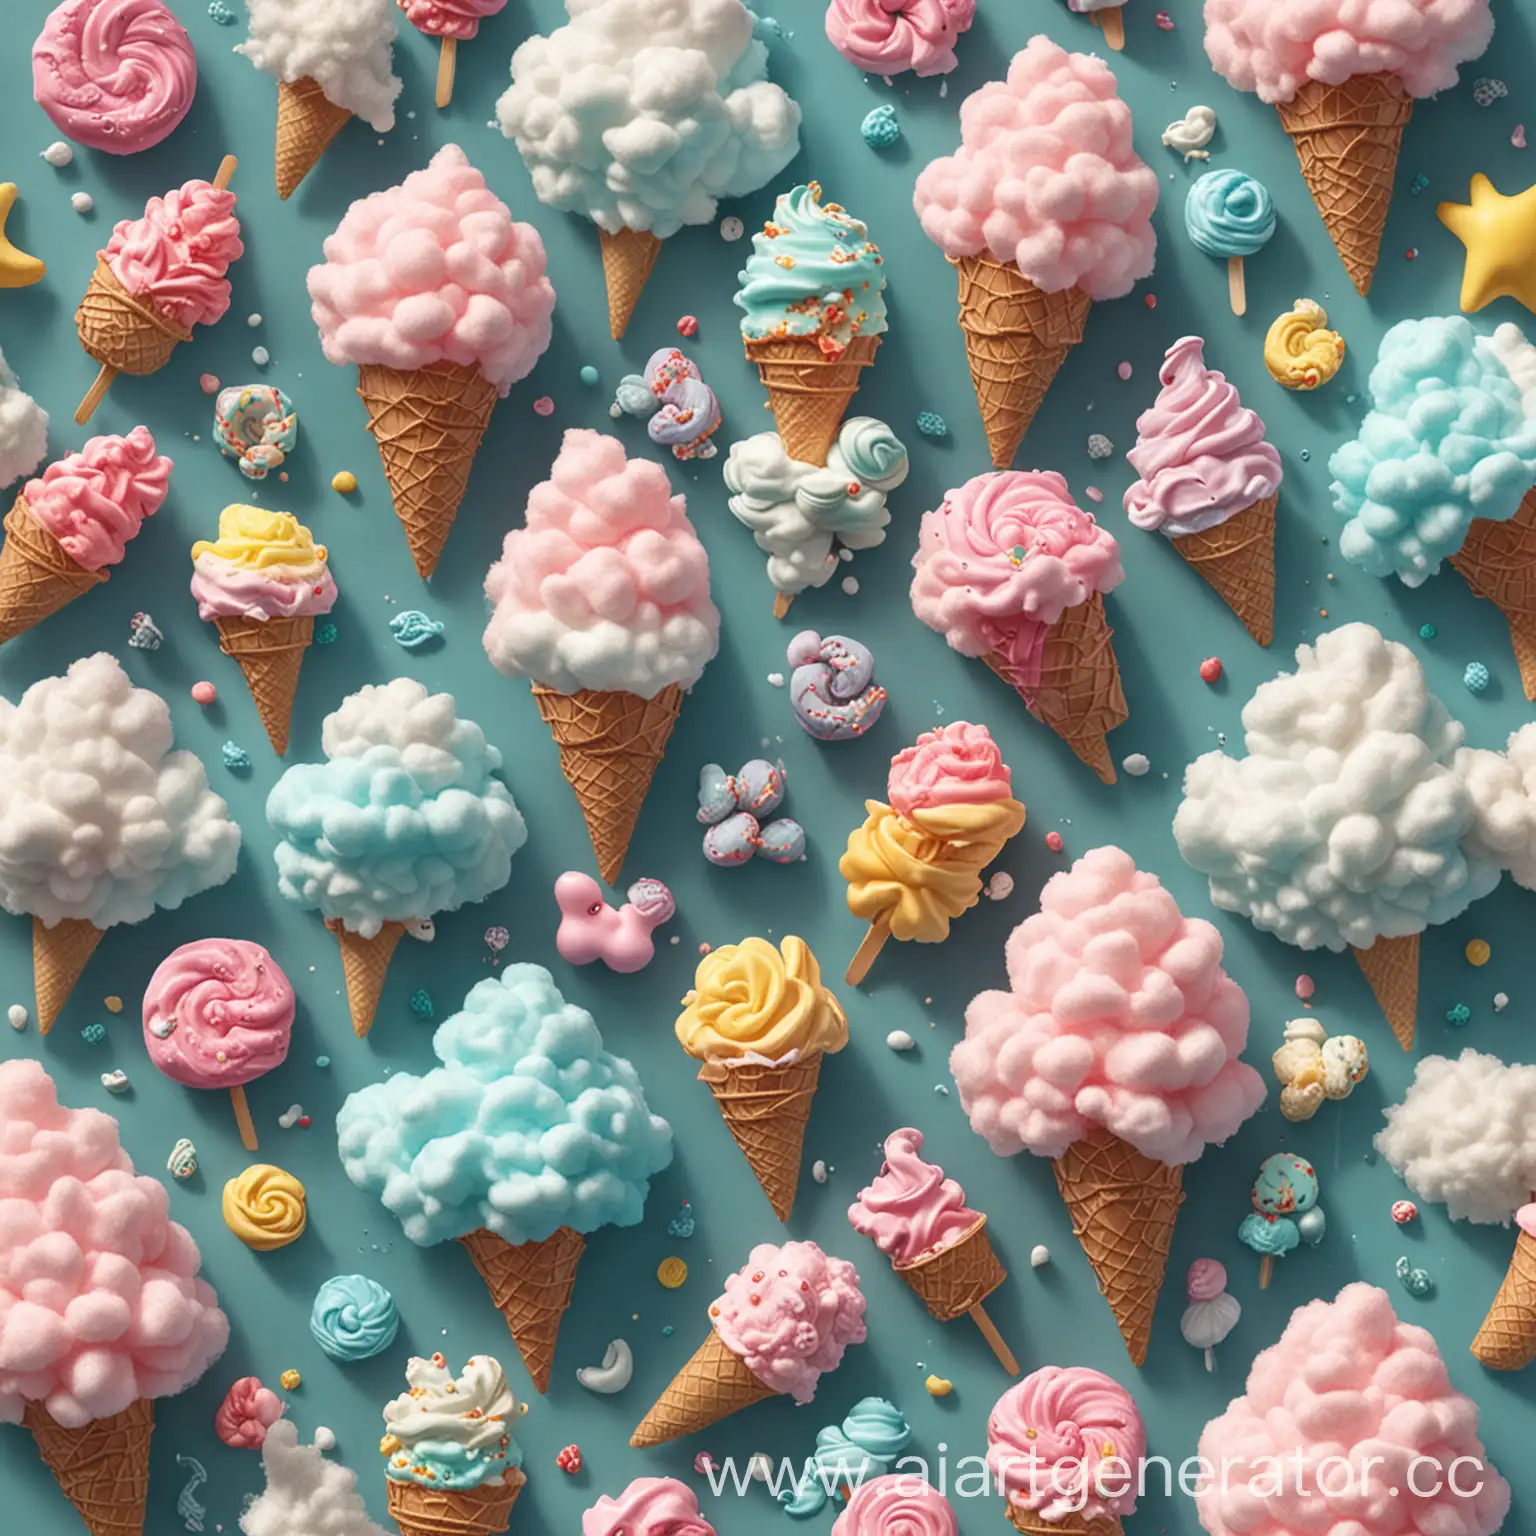 море, лето, солнце, облака сахарная вата, радость, конфеты, мороженое все в 3D